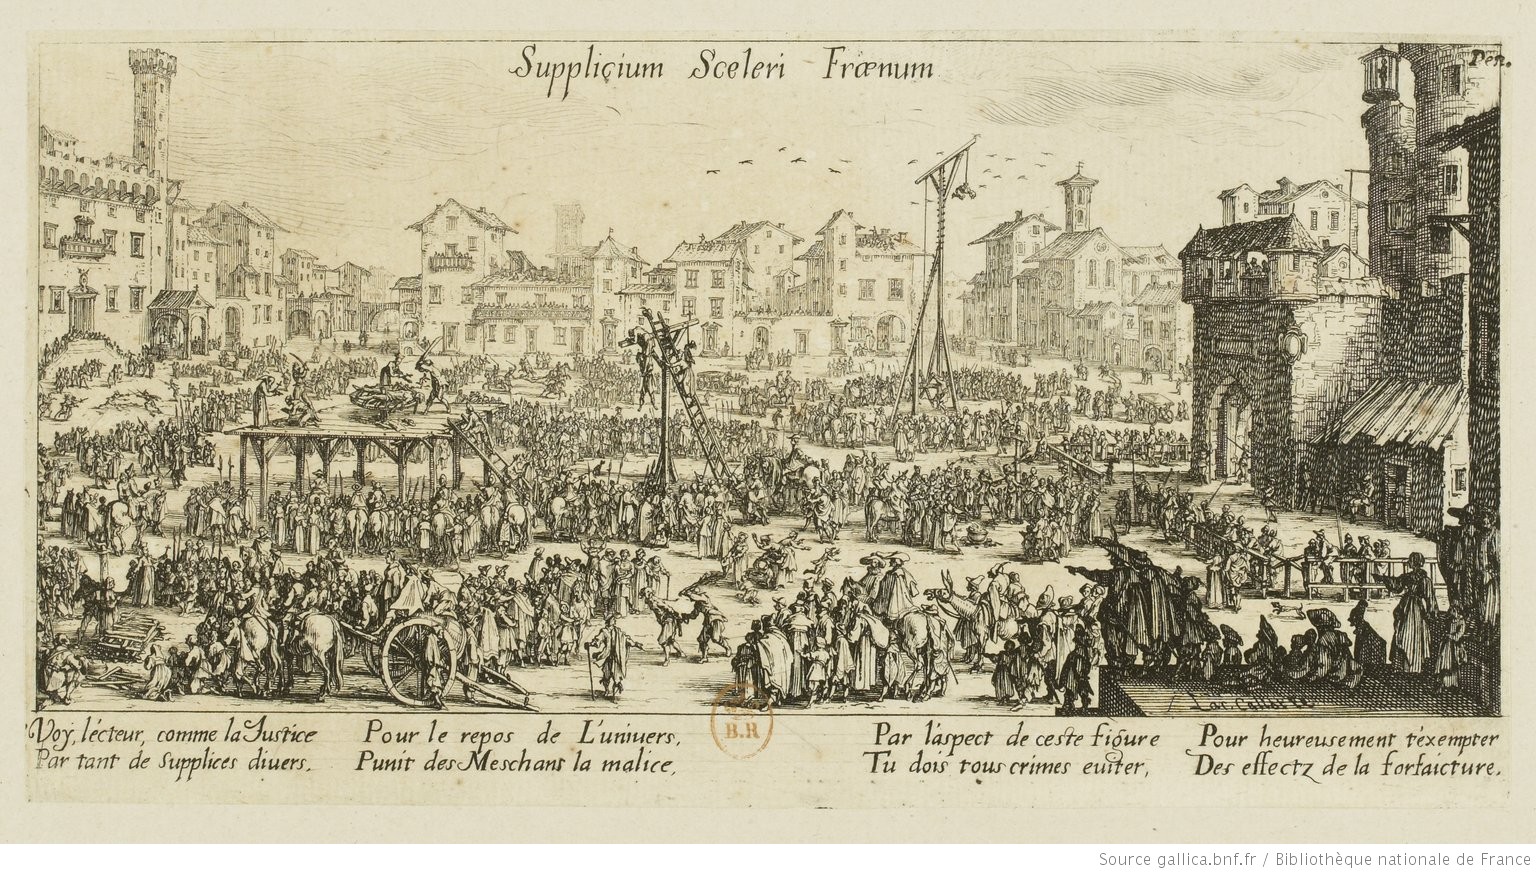 "Supplicium sceleri froenum". Eau-forte de Jacques Callot, Nancy (vers 1628-1630). Source gallica.bnf.fr / BnF